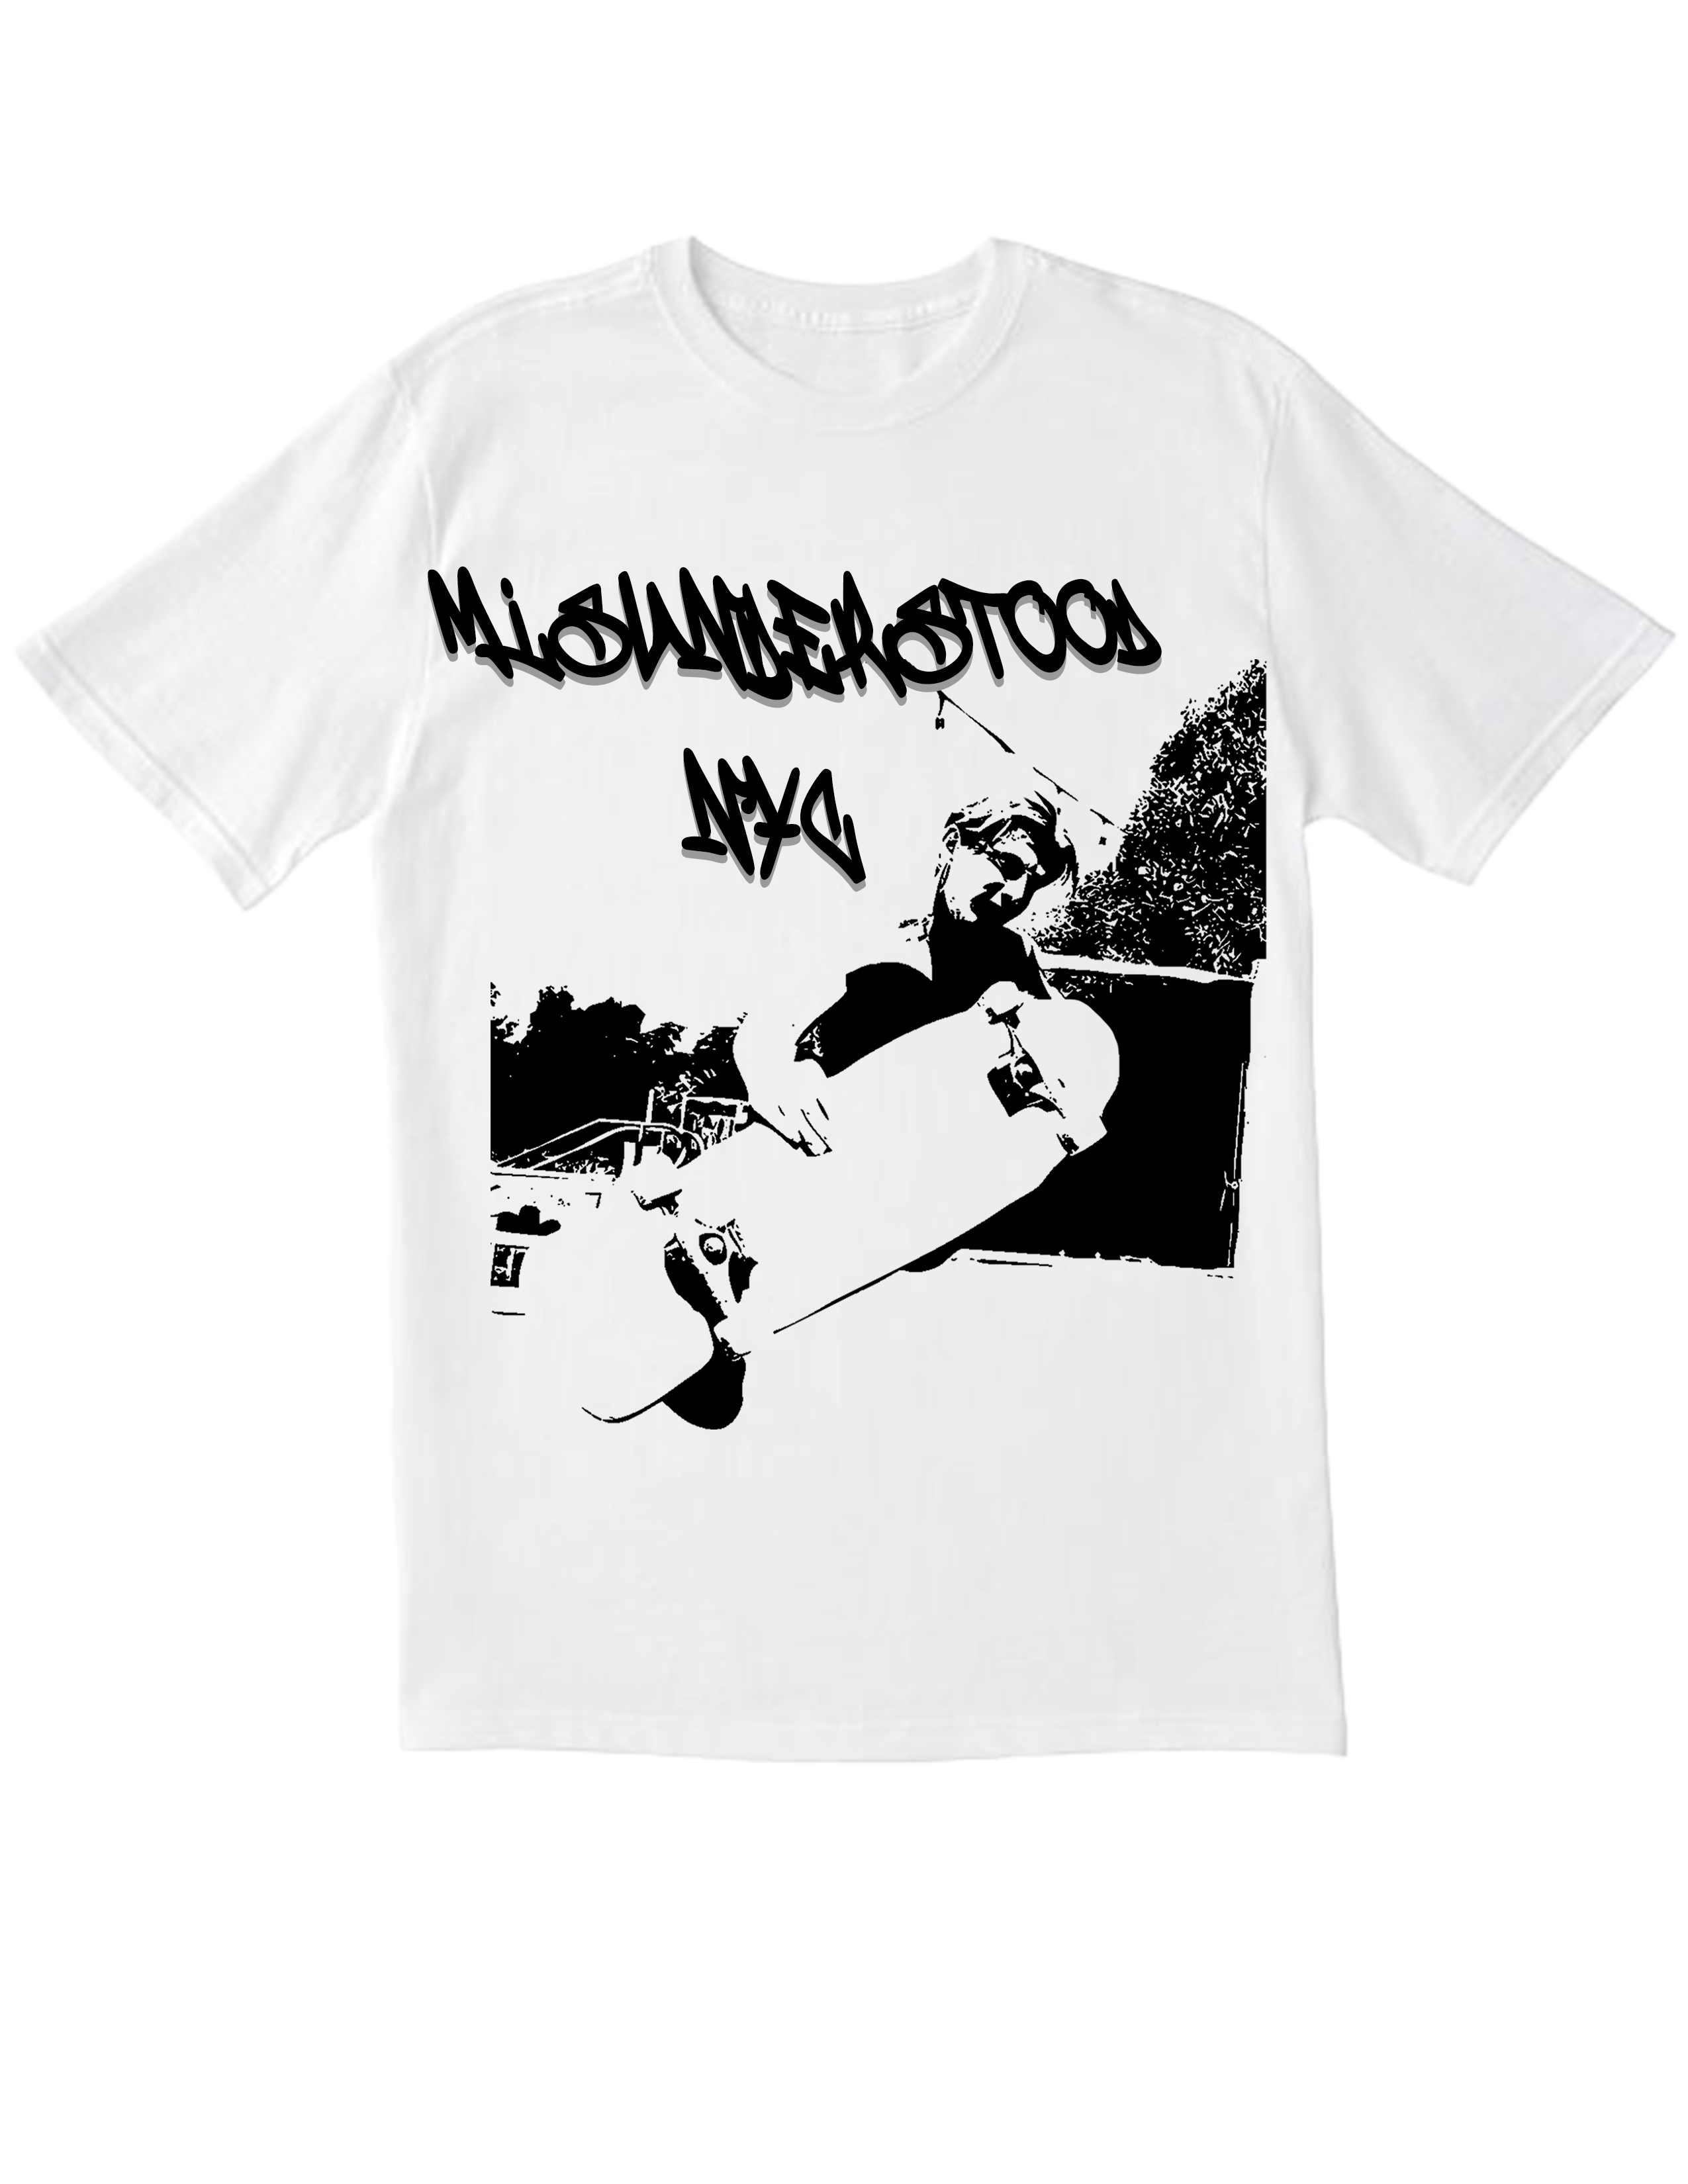 Indy T-Shirt – Misunderstood NYC